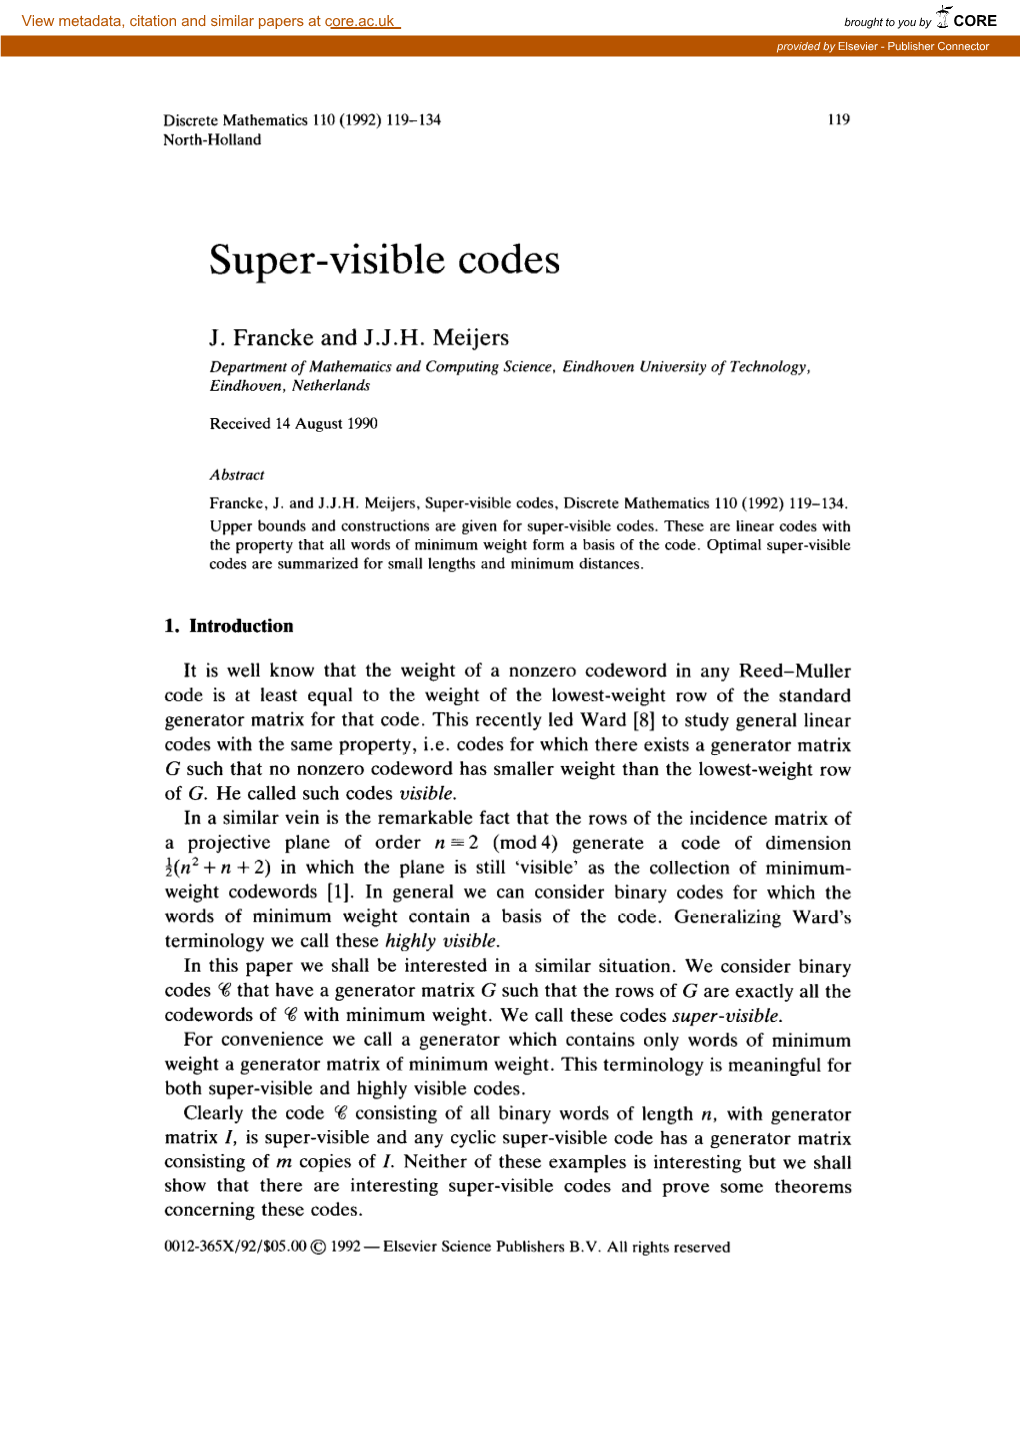 Super-Visible Codes